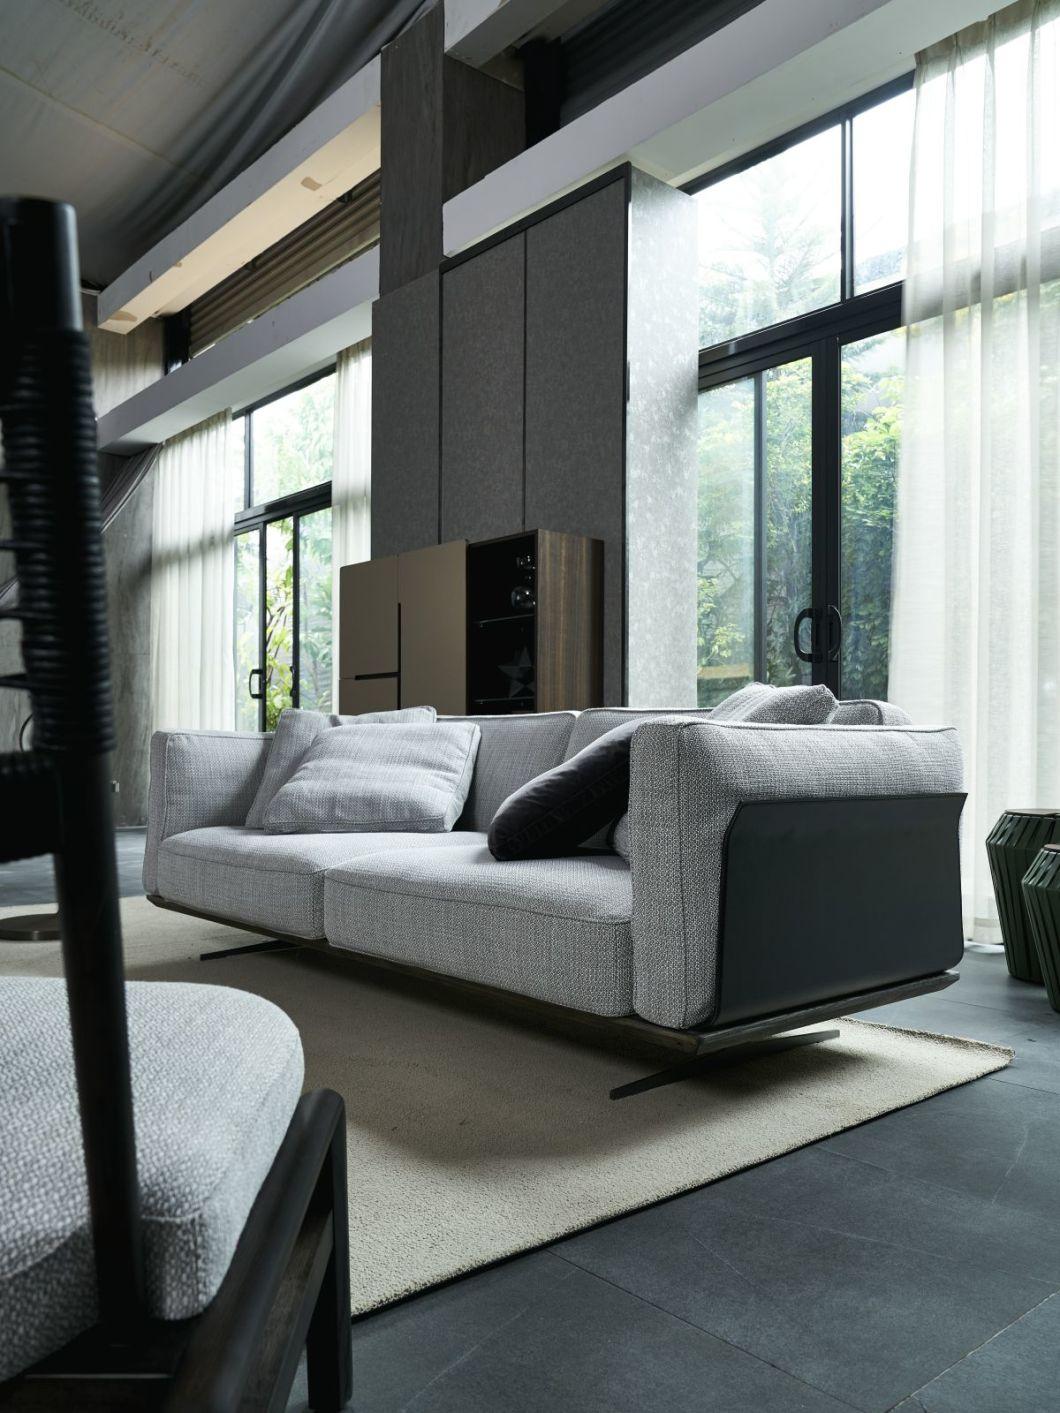 PF99 4 Seater Fabric Sofa, Latest Design Sofas, Italian Modern Design, Living Set in Home and Hotel Furniture Customization